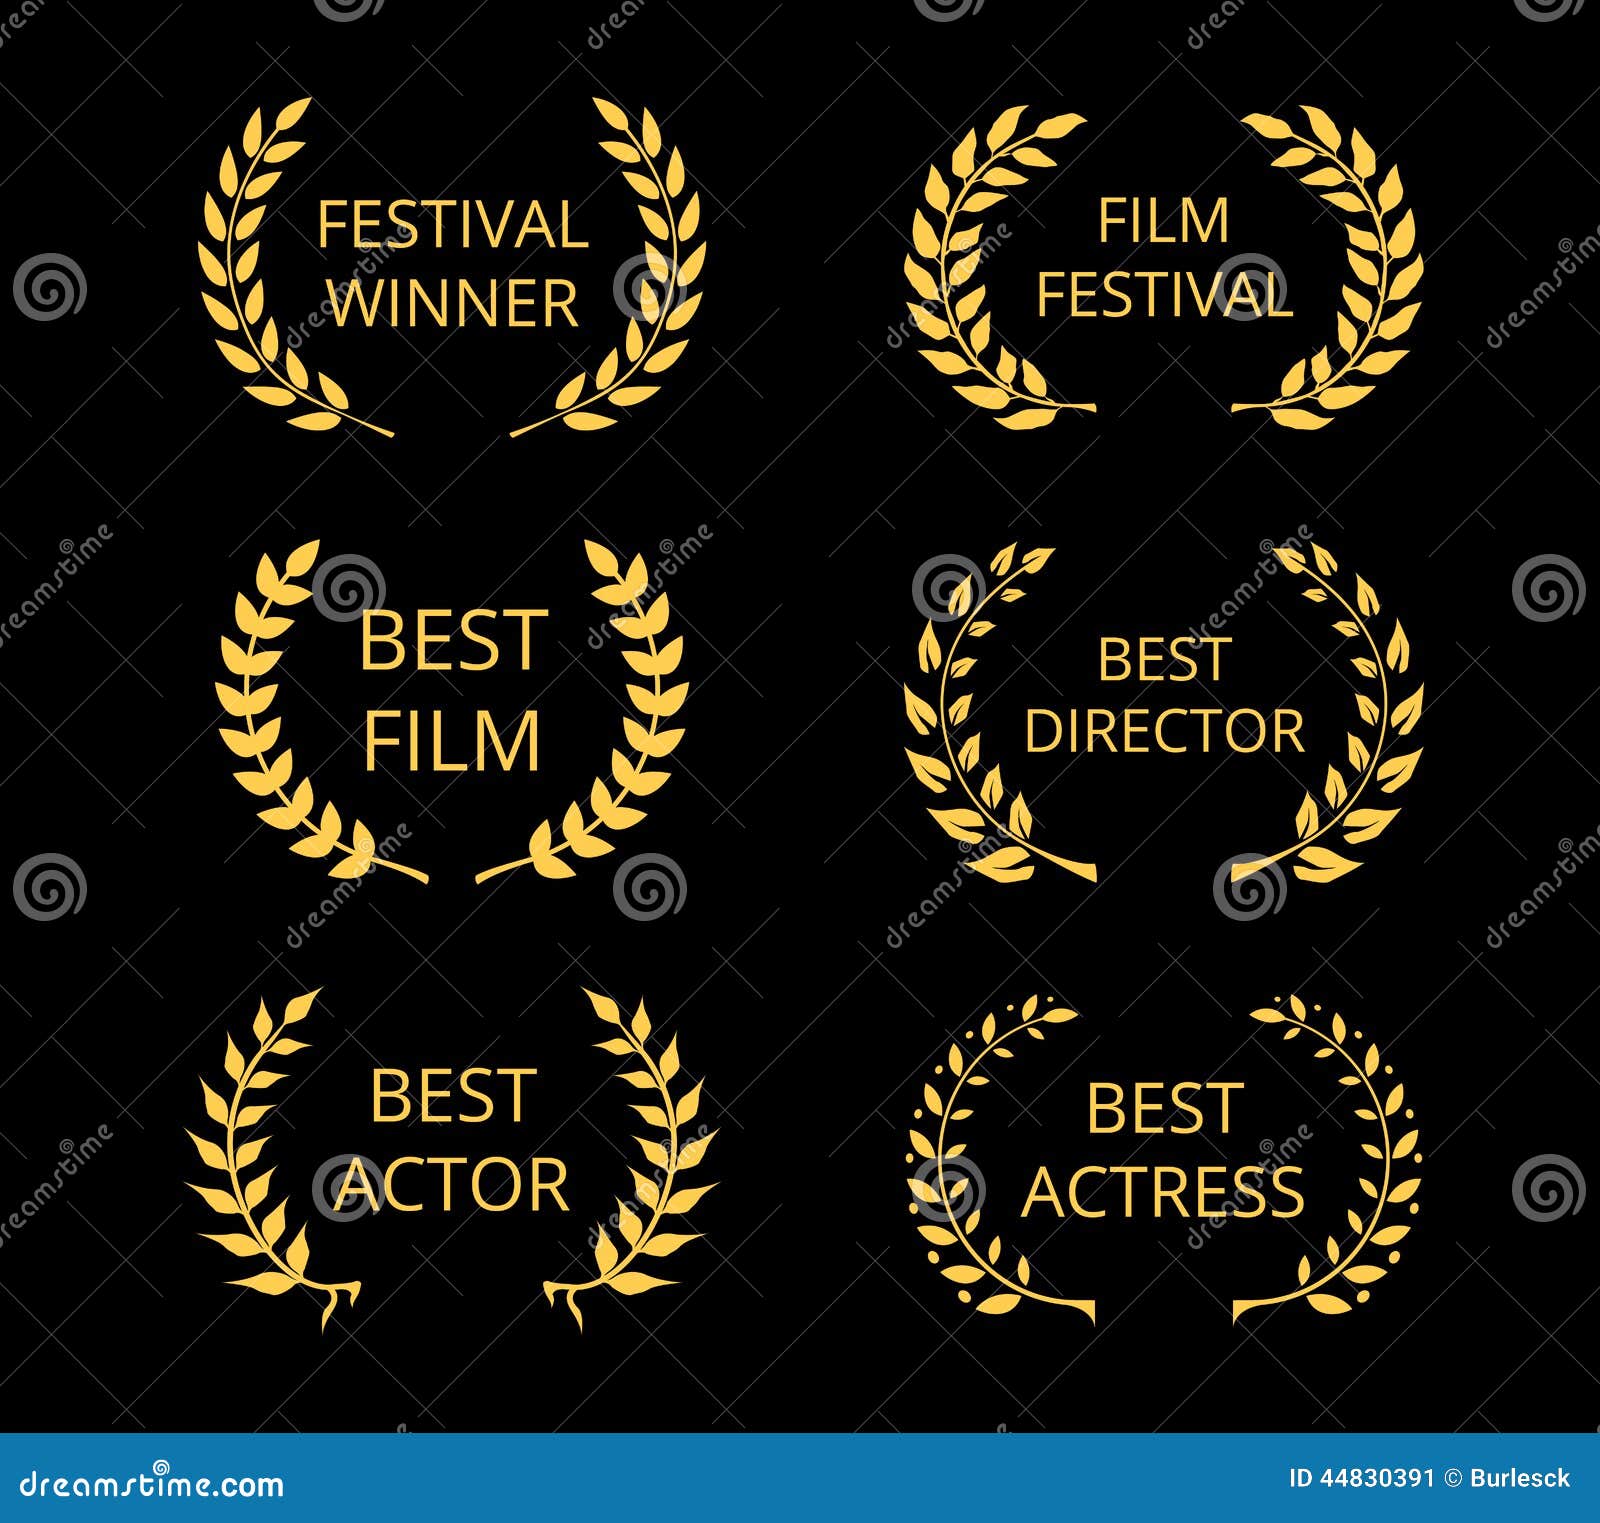 Film Awards Stock Vector - Image: 44830391